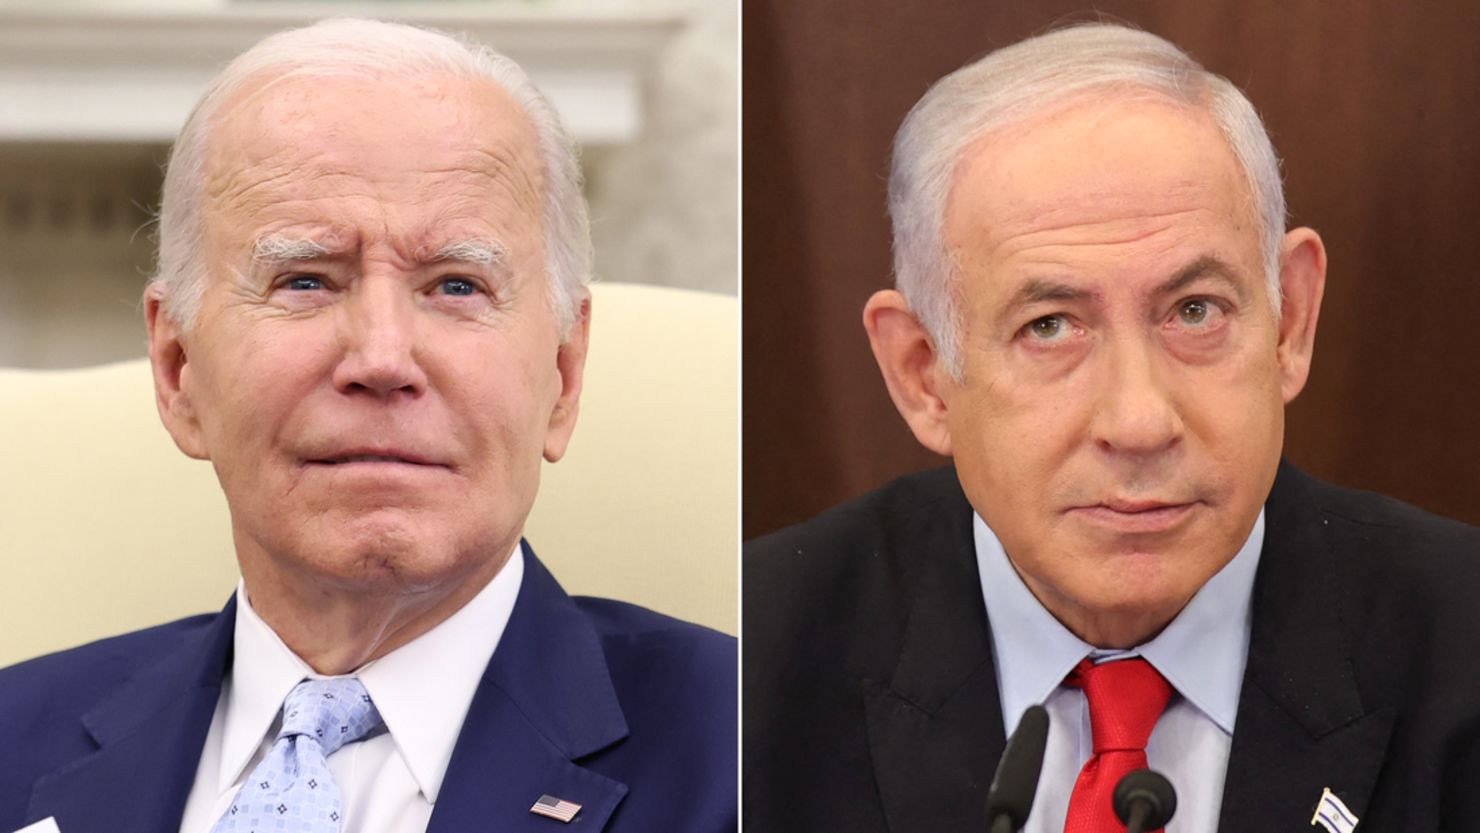 Israel And Us Discussing Possible Biden Visit After Netanyahu Extends Invitation Cnn Politics